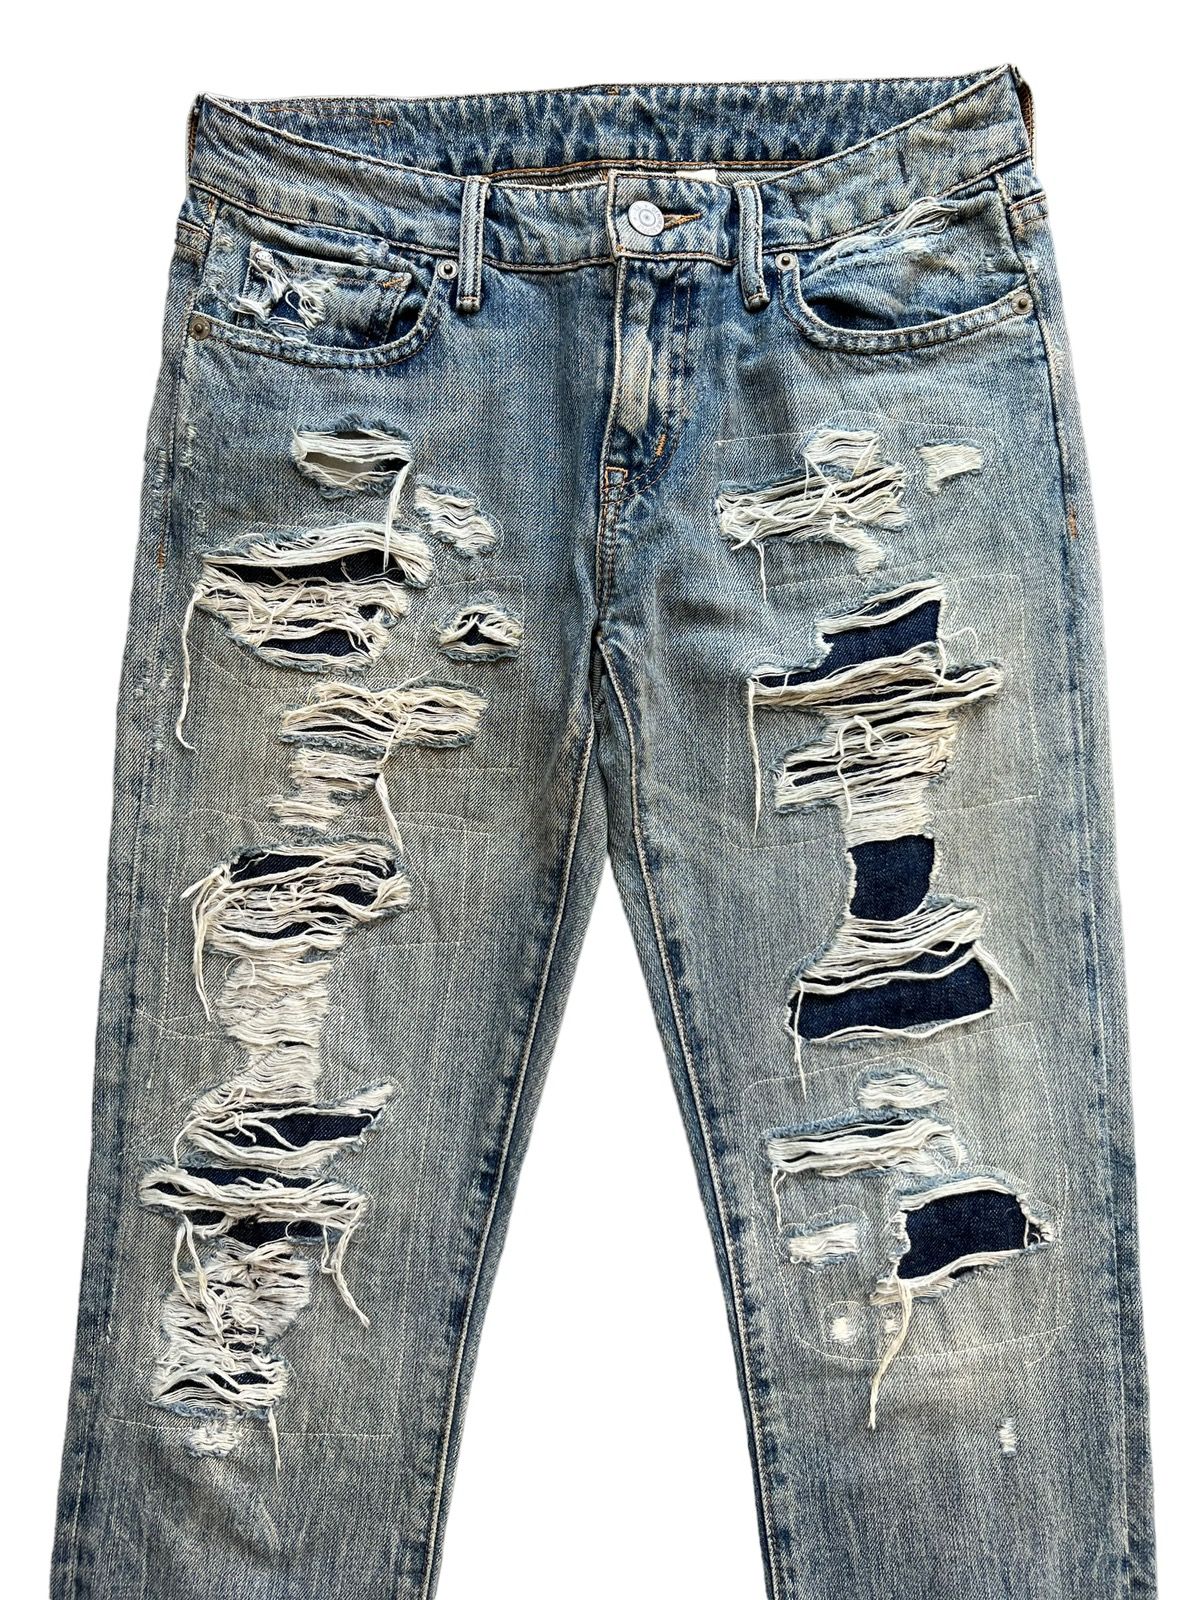 Ralph Lauren Rusty Ripped Distressed Denim Jeans 28x29 - 4